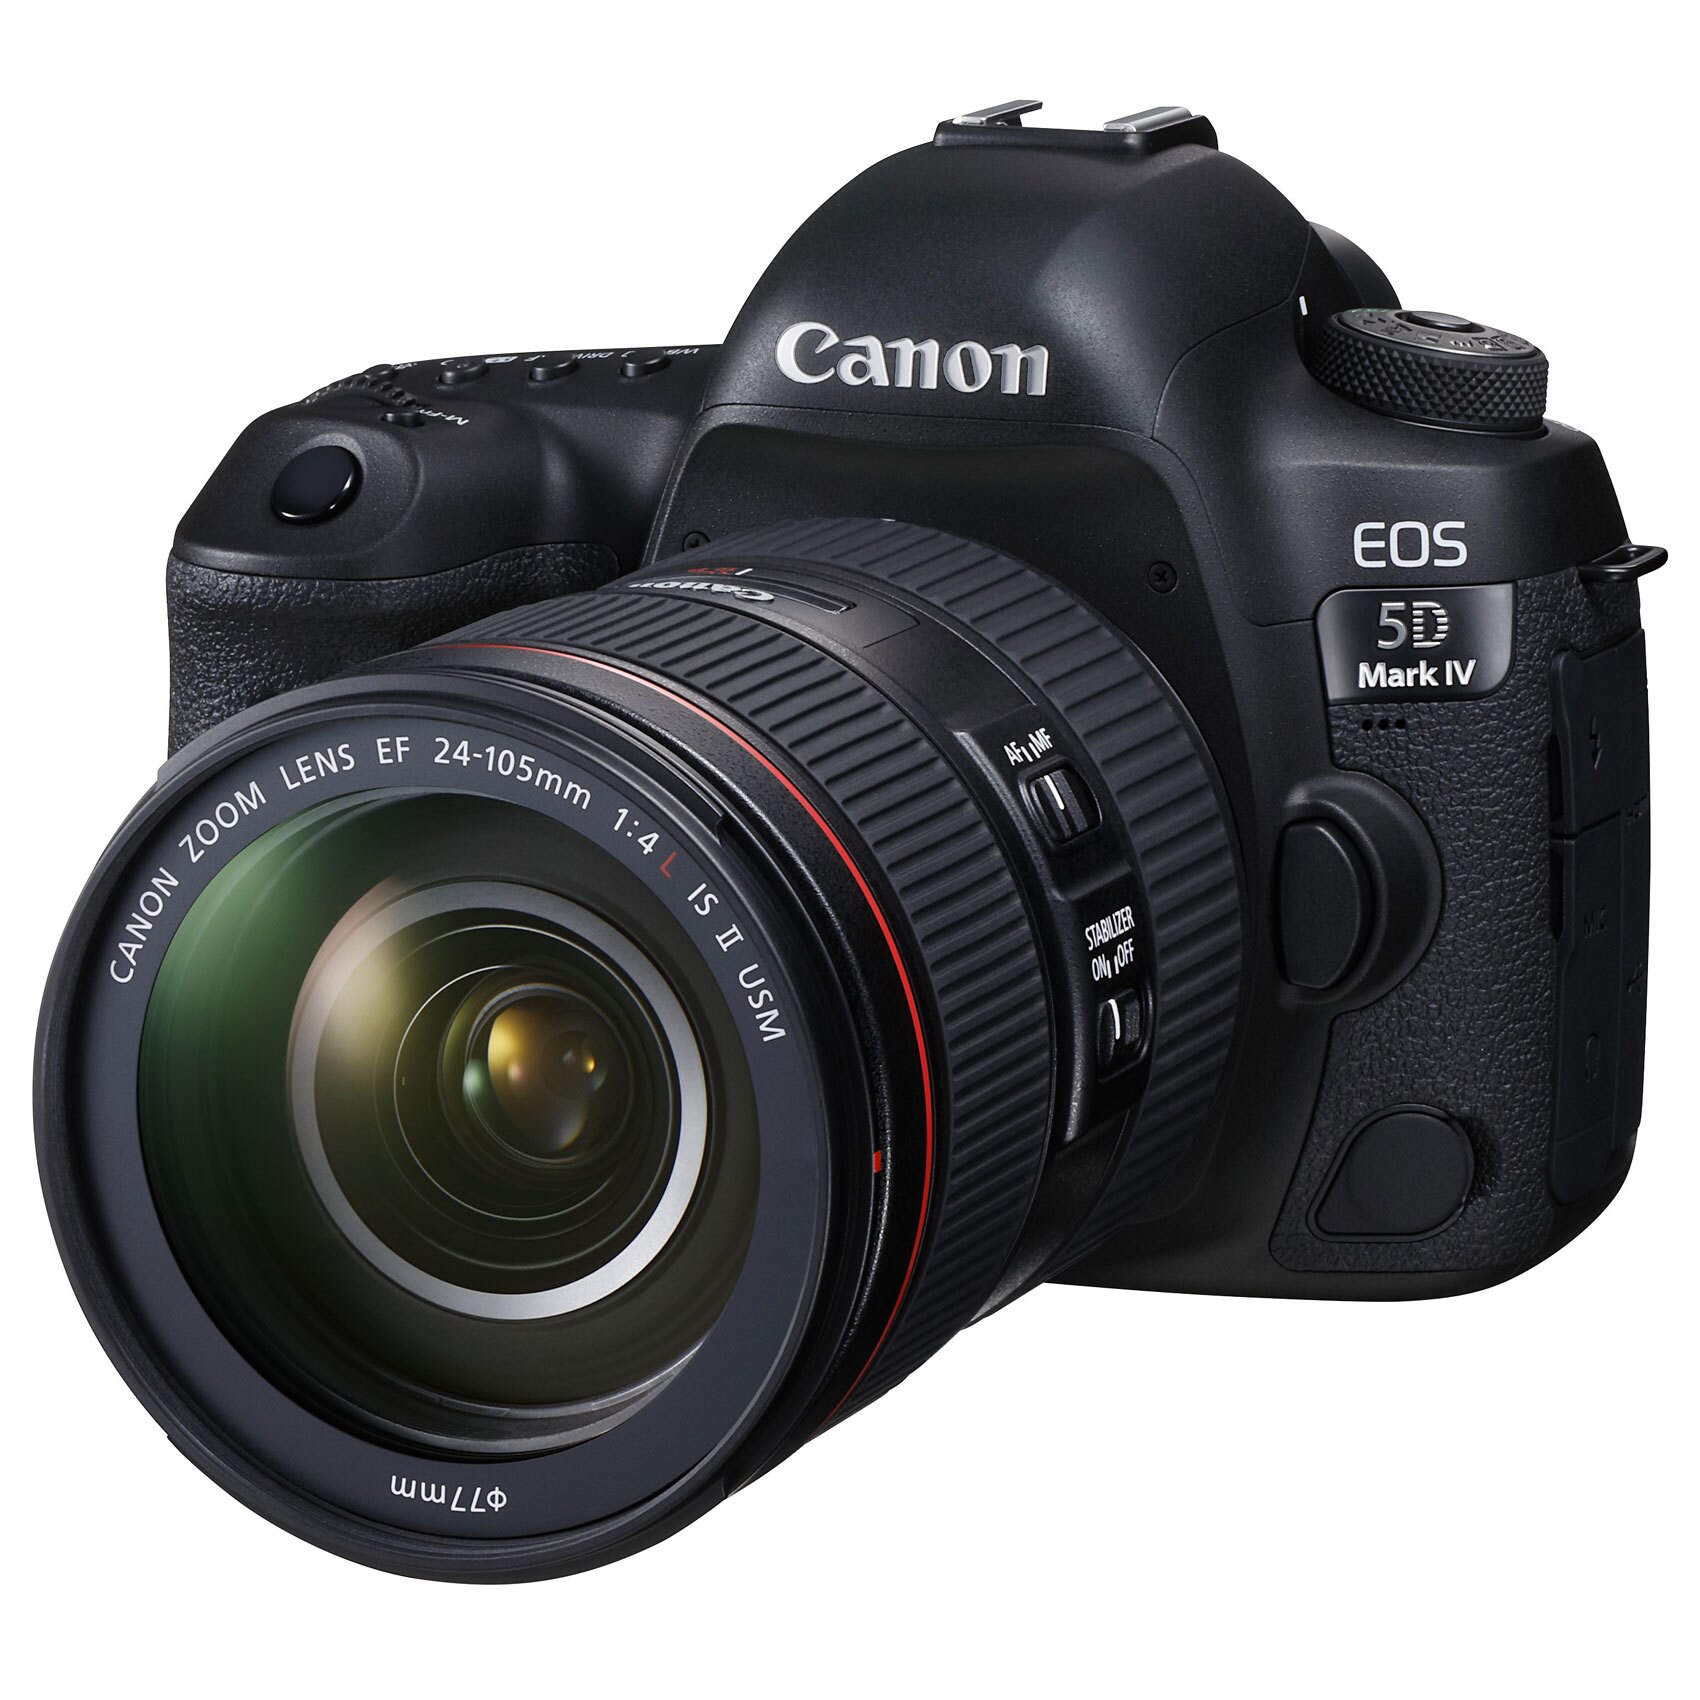 Canon 5D Mark IV + 24-105L IS USM Lens